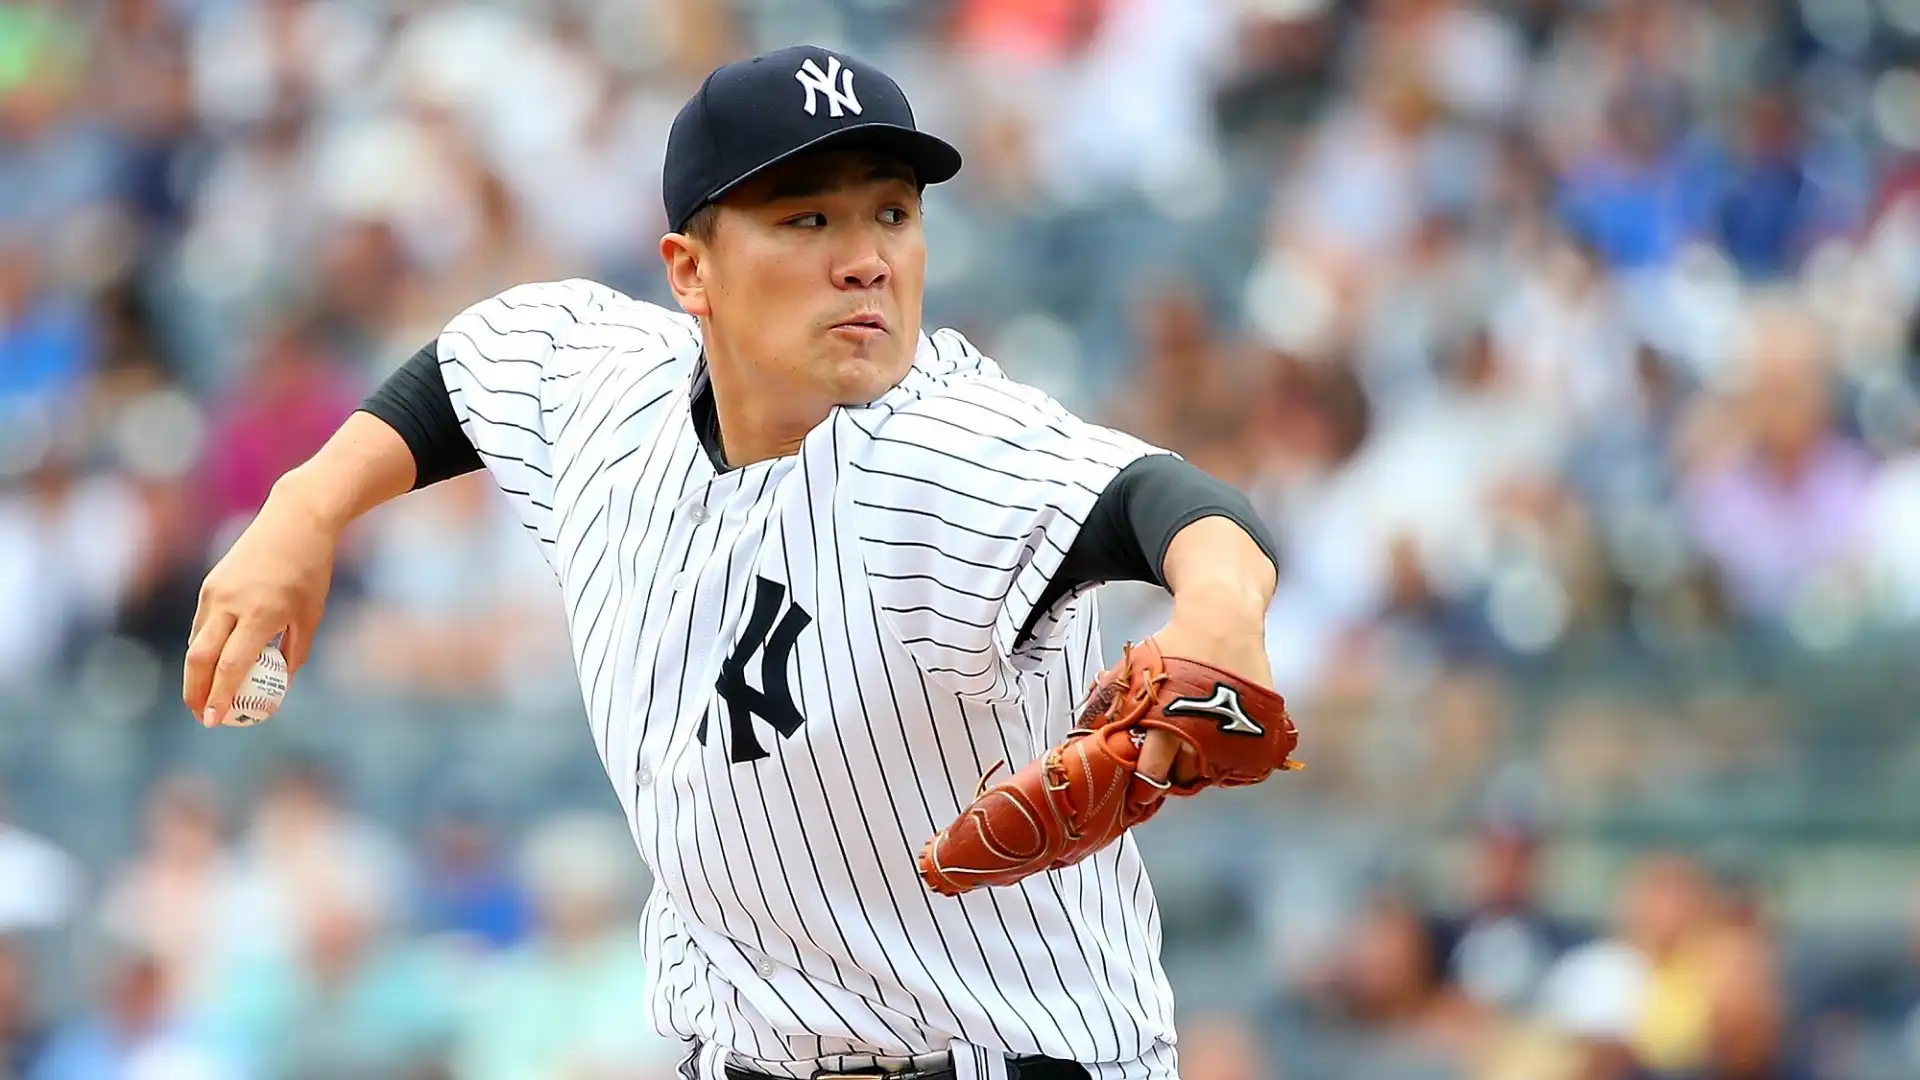 Masahiro Tanaka (Baseball): patrimonio netto stimato 30+ milioni di dollari. Due volte All-Star MLB